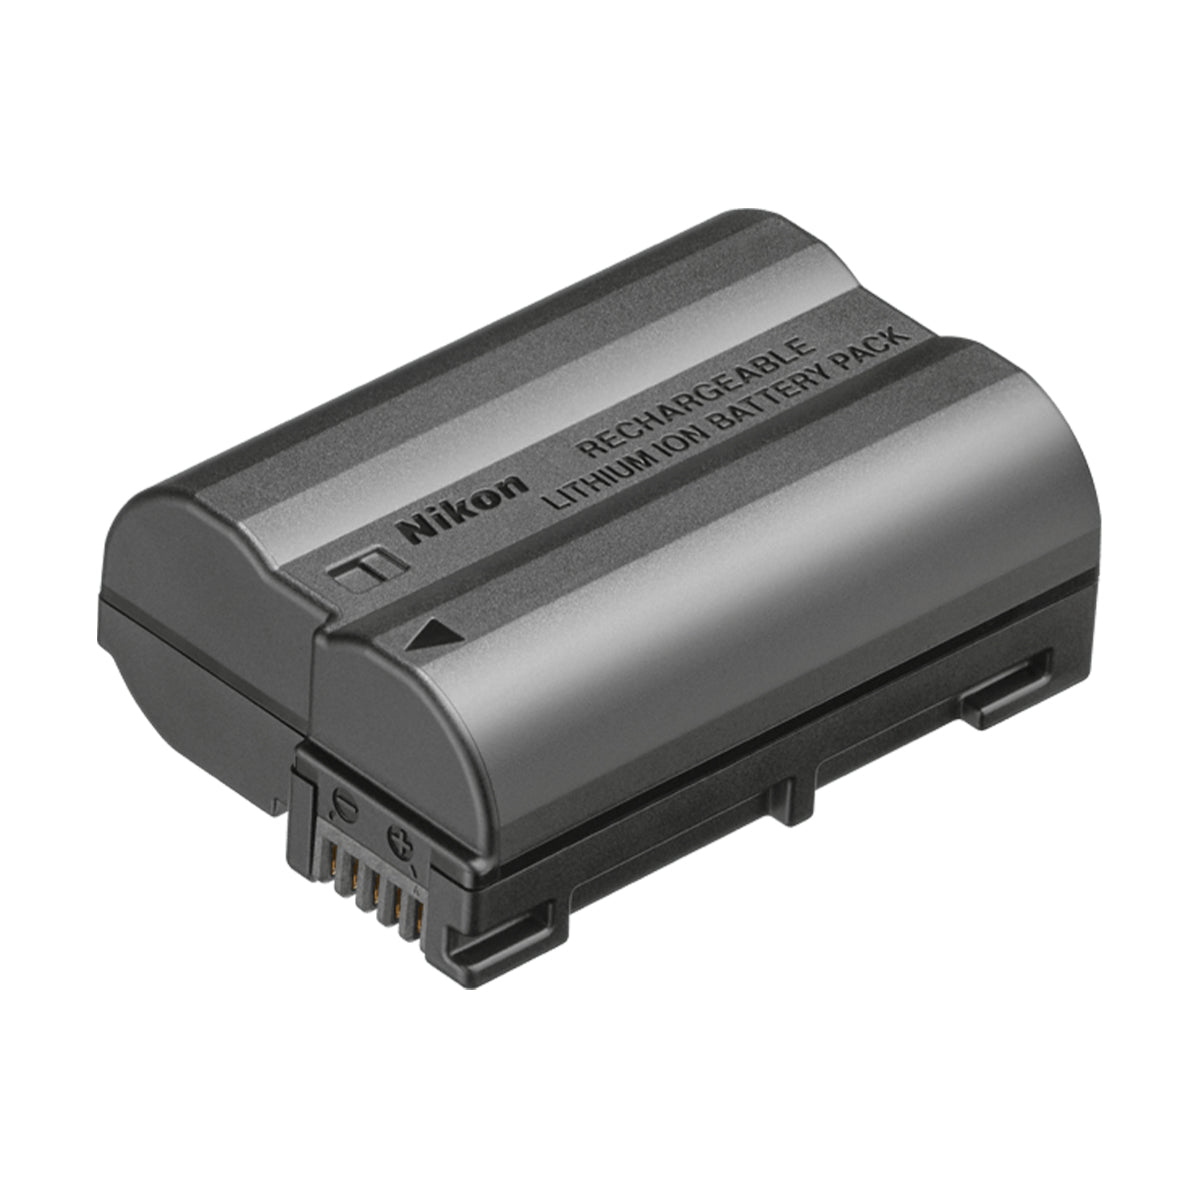 Nikon EN-EL15c Rechargeable Battery